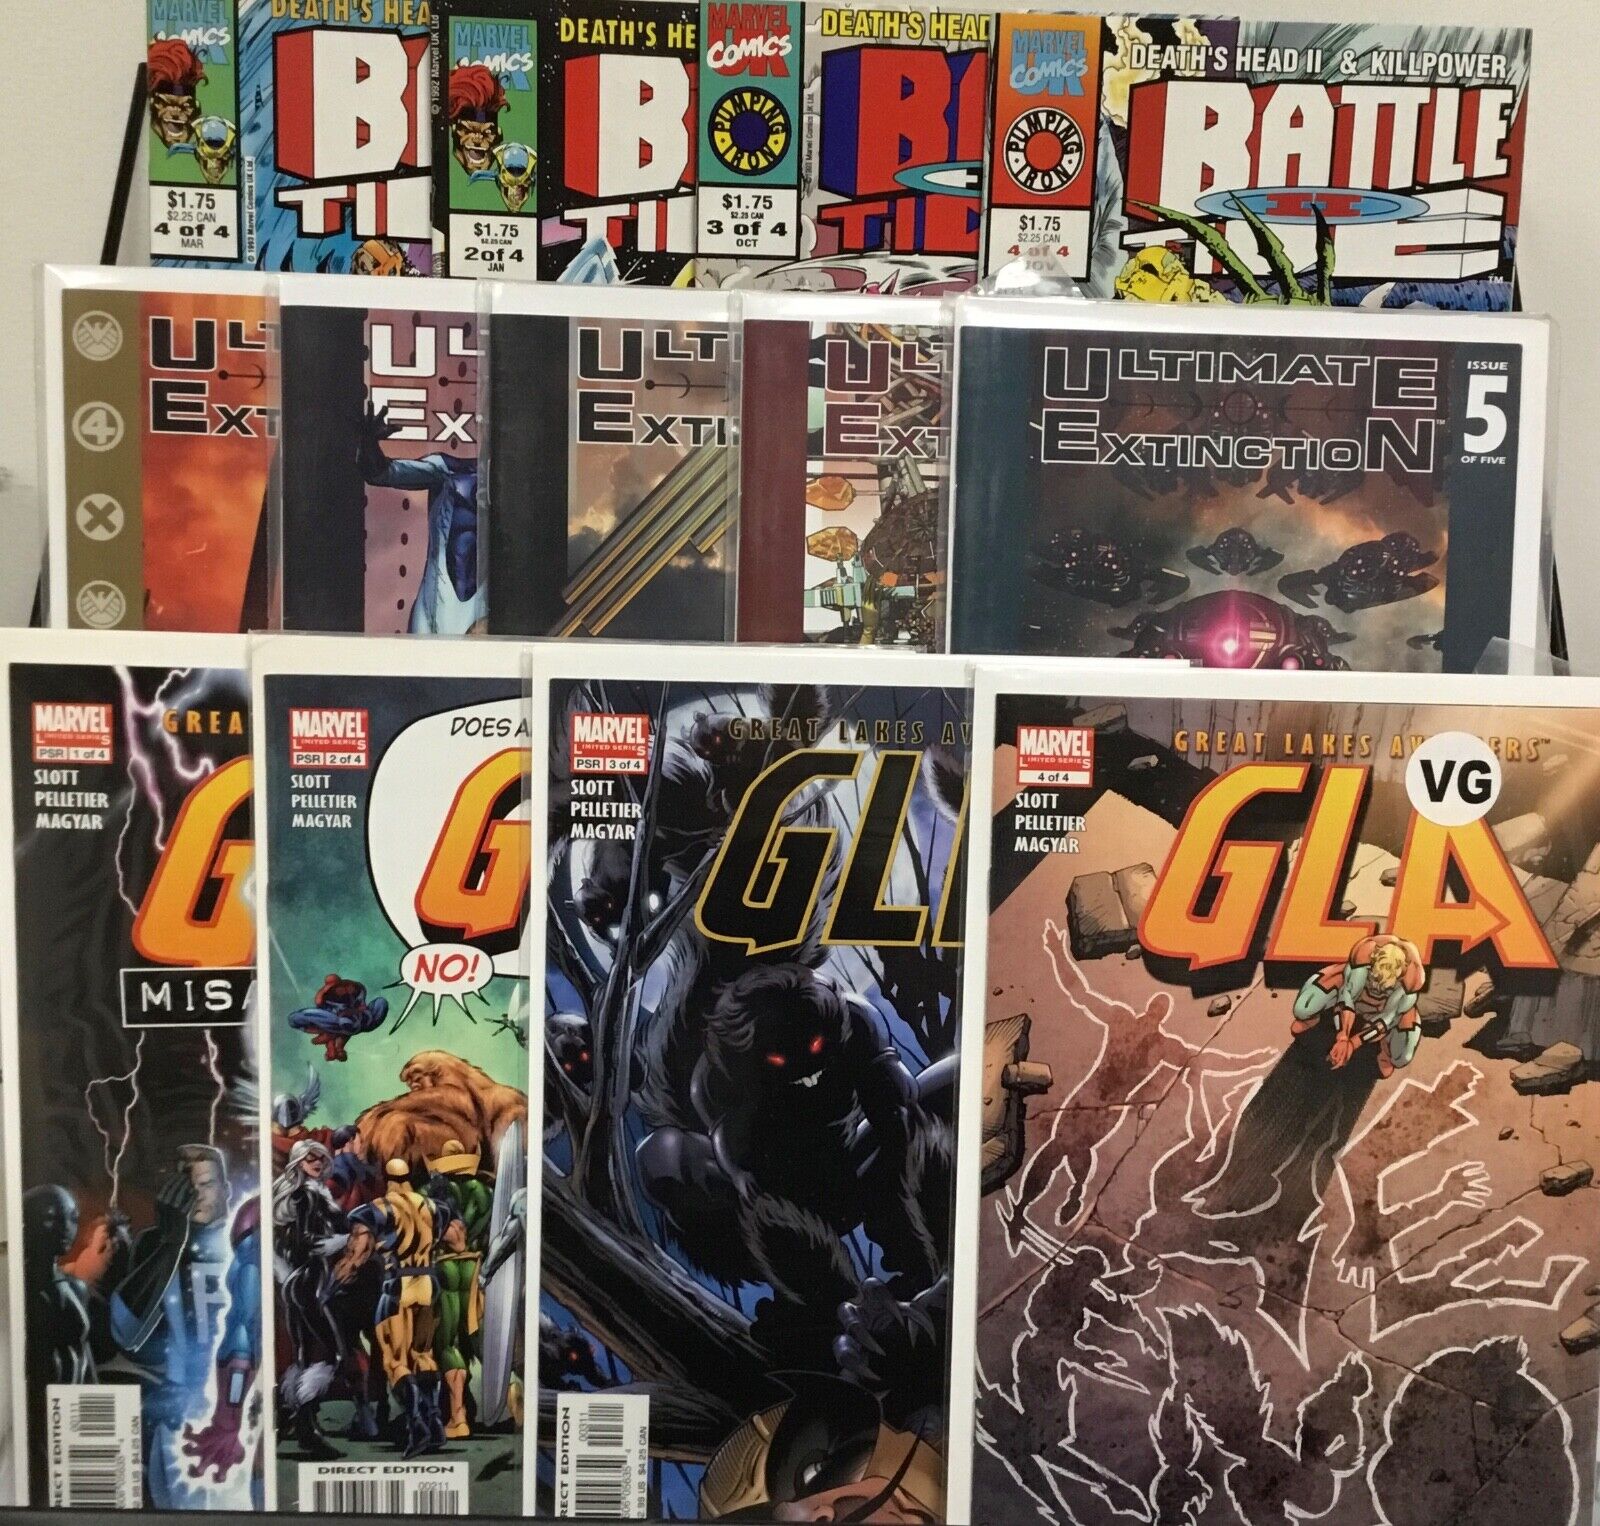 Marvel Comics Battle Tide II 1-4, Ultimate Extinction 1-5, GLA 1-4